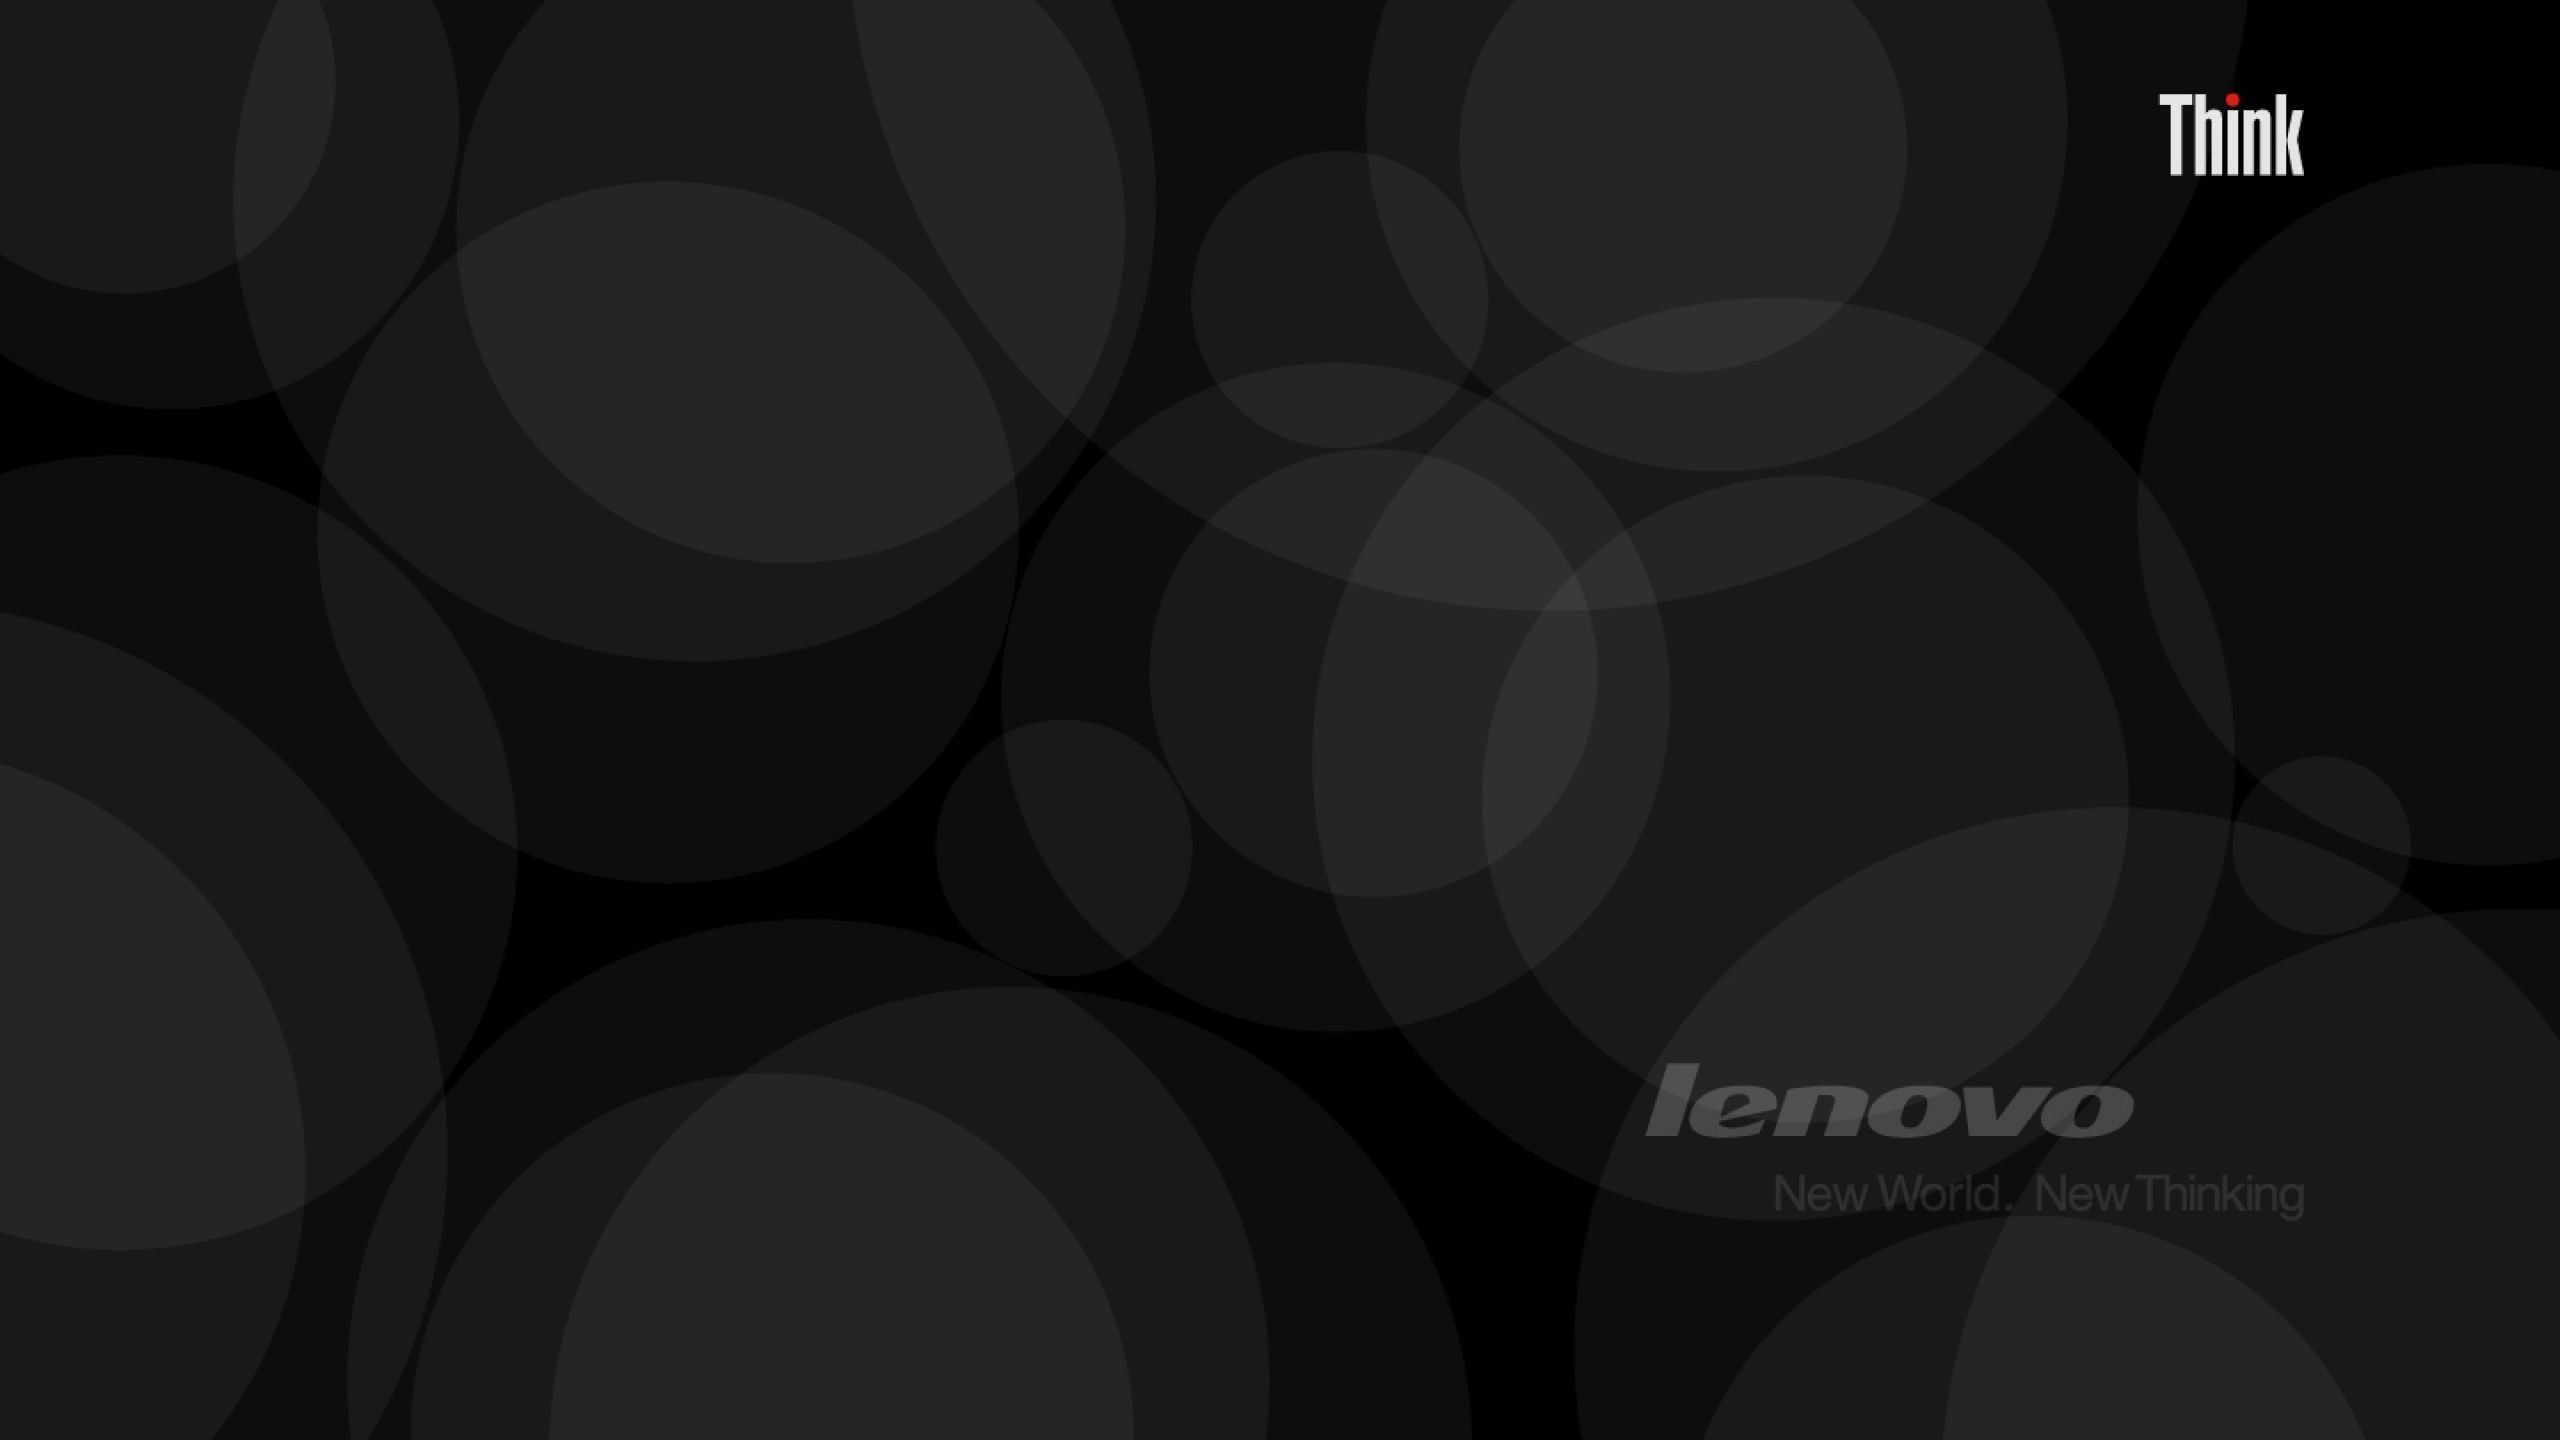 Lenovo Thinkpad Wallpaper Download Free. Lenovo wallpaper